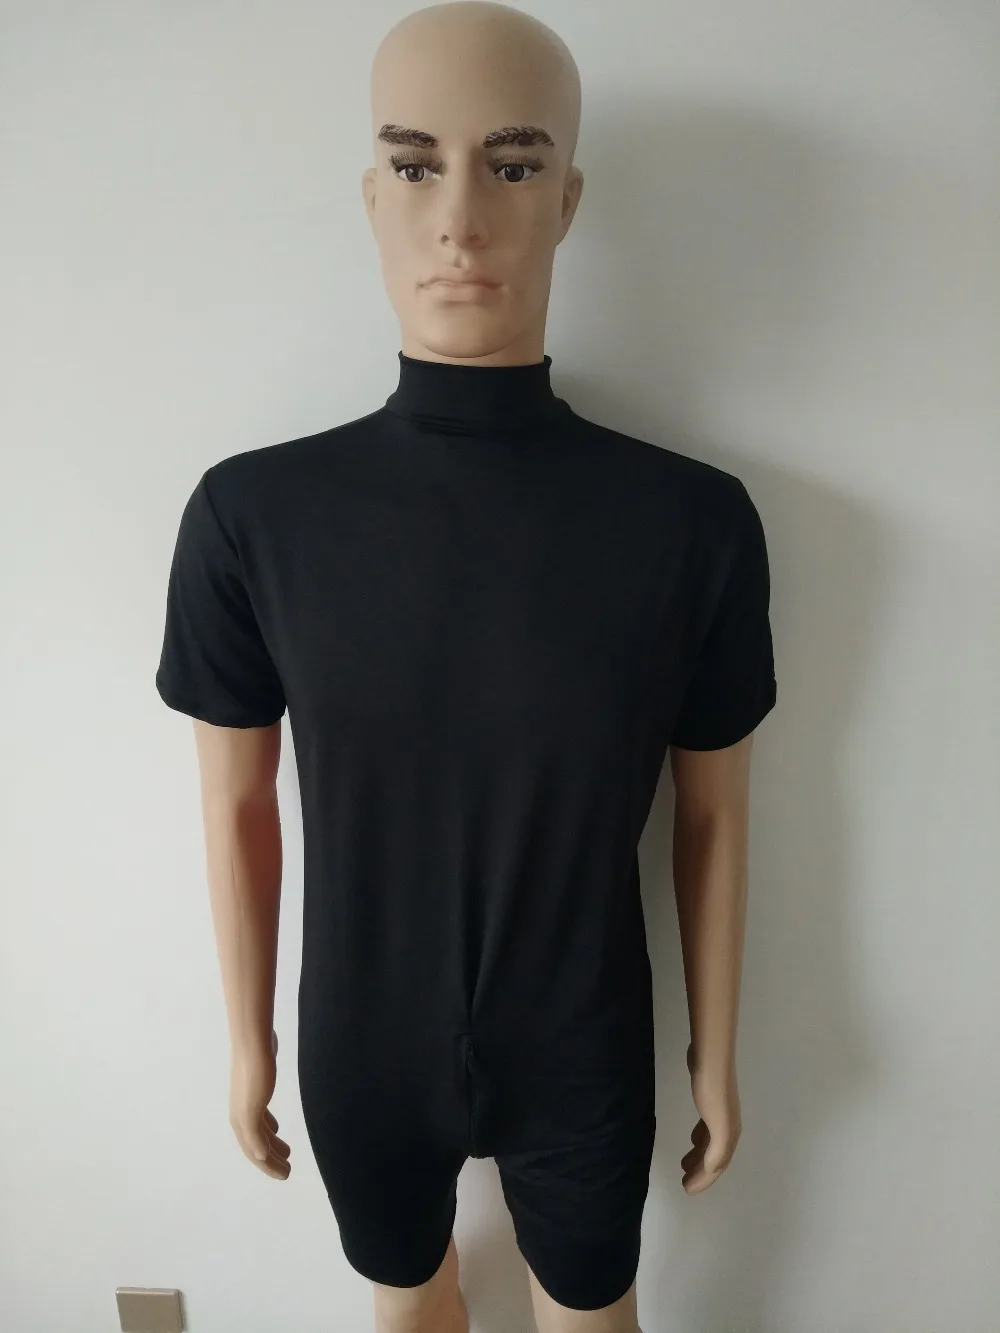 Adults kids Sportswear short Sleeve Turtleneck Unitard Lycra spandex Bodysuit Costumes Body Tights double back crotch zipper